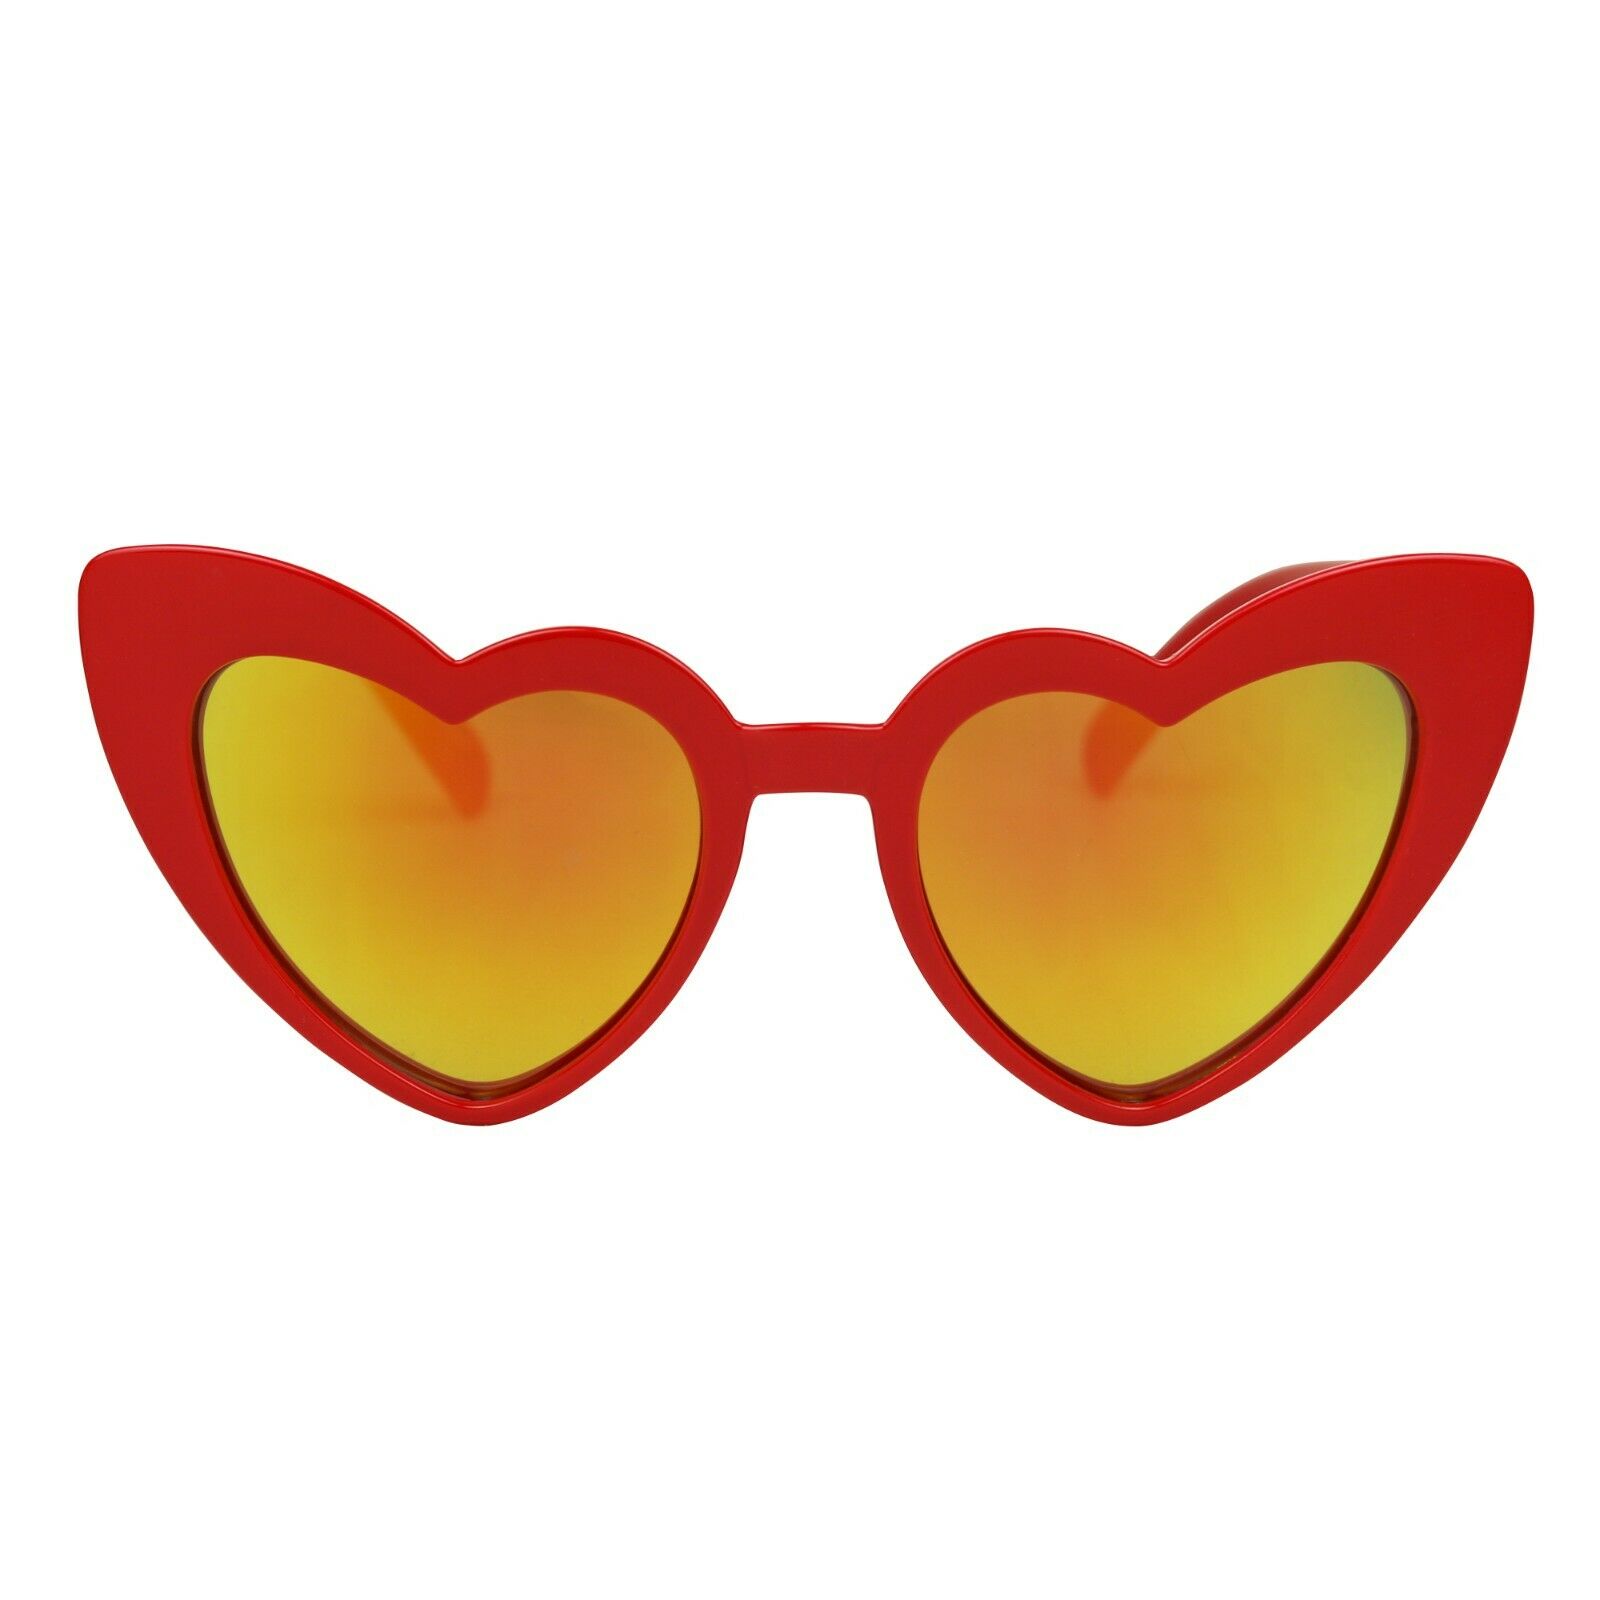 Shadyveu Trendy Cute Heart Shaped Red Frame Yellow Mirrored Lens Kids Sunglasses